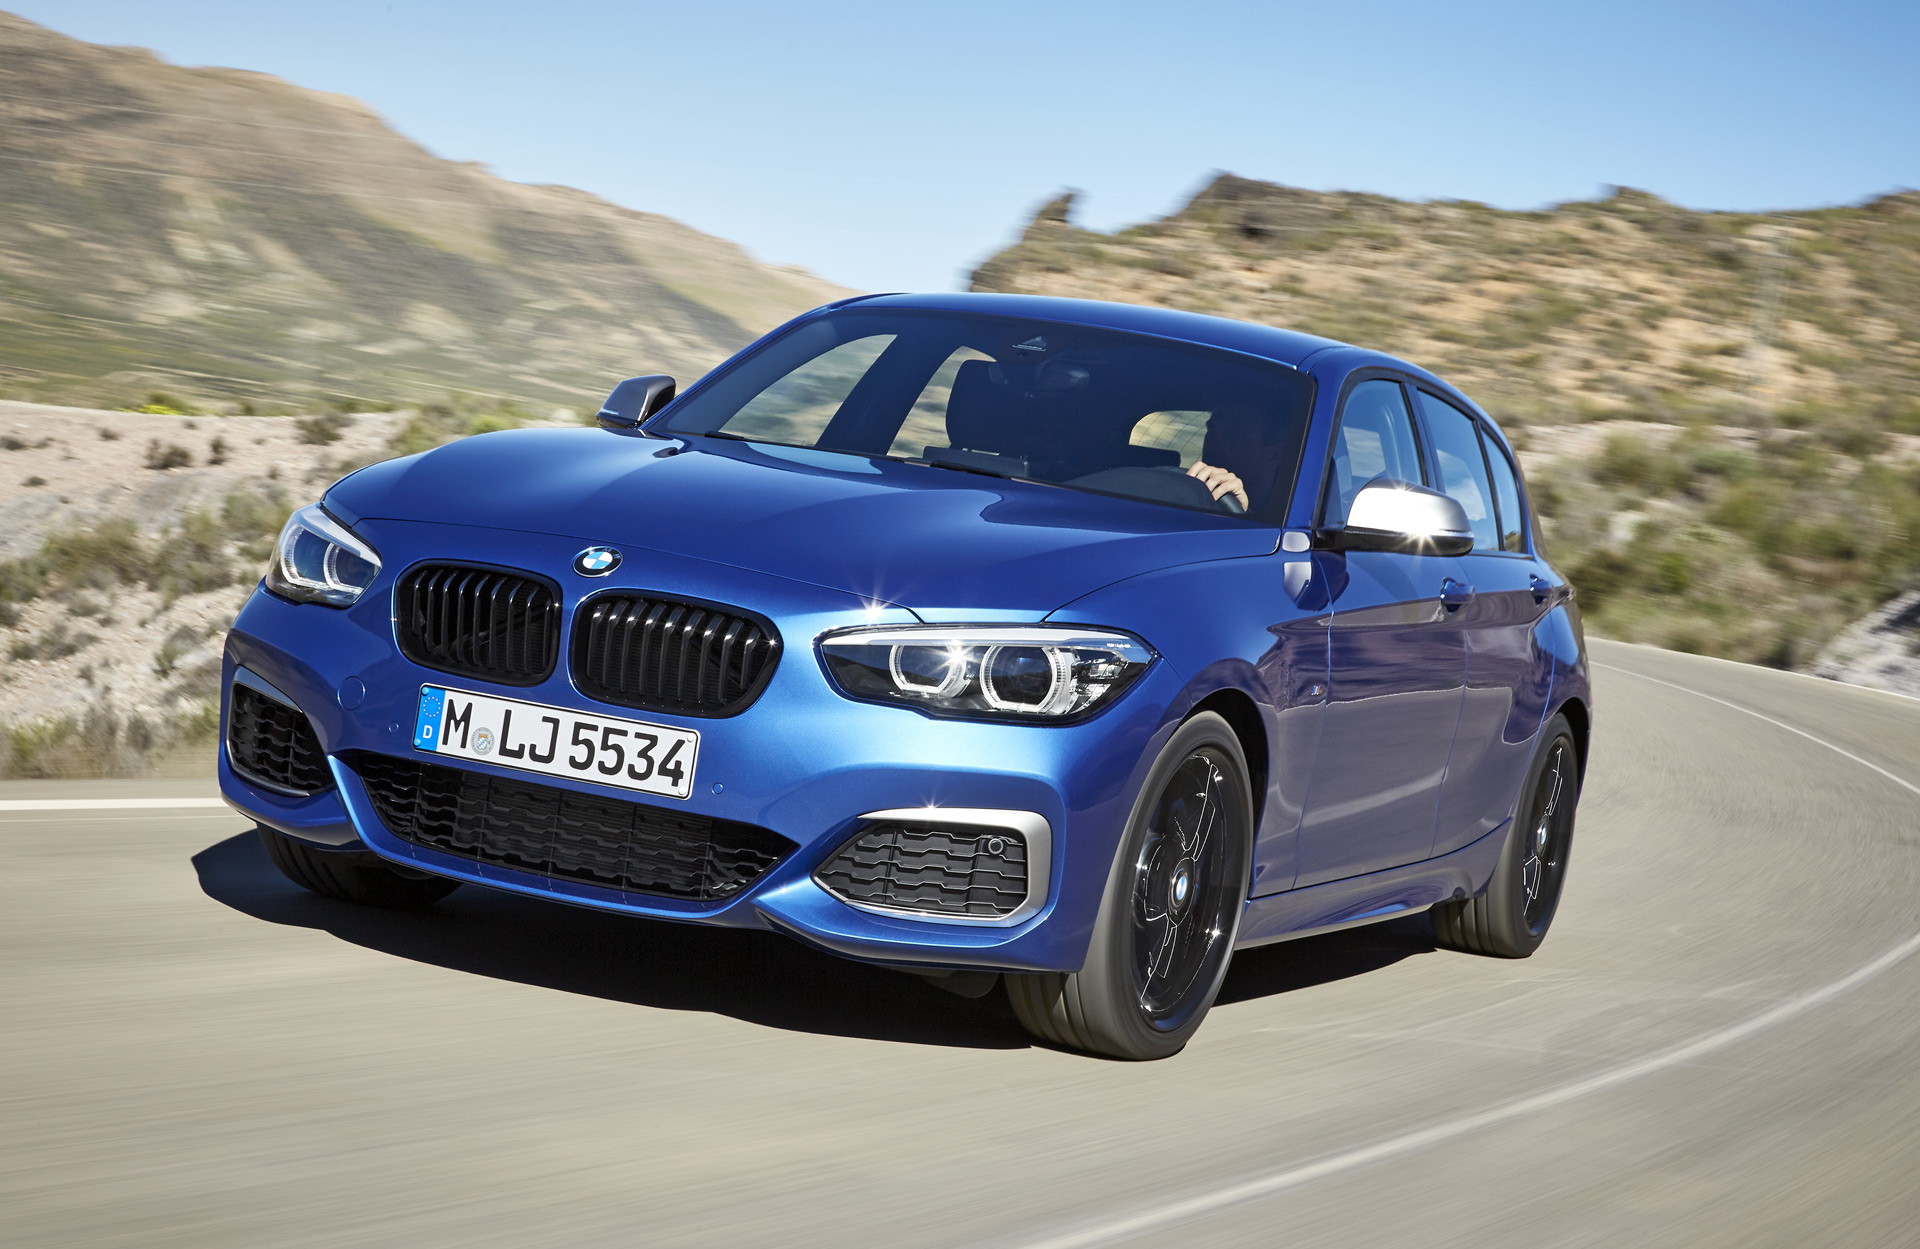 BMW 1-Series Hatchback gets updates ahead of model's arrival